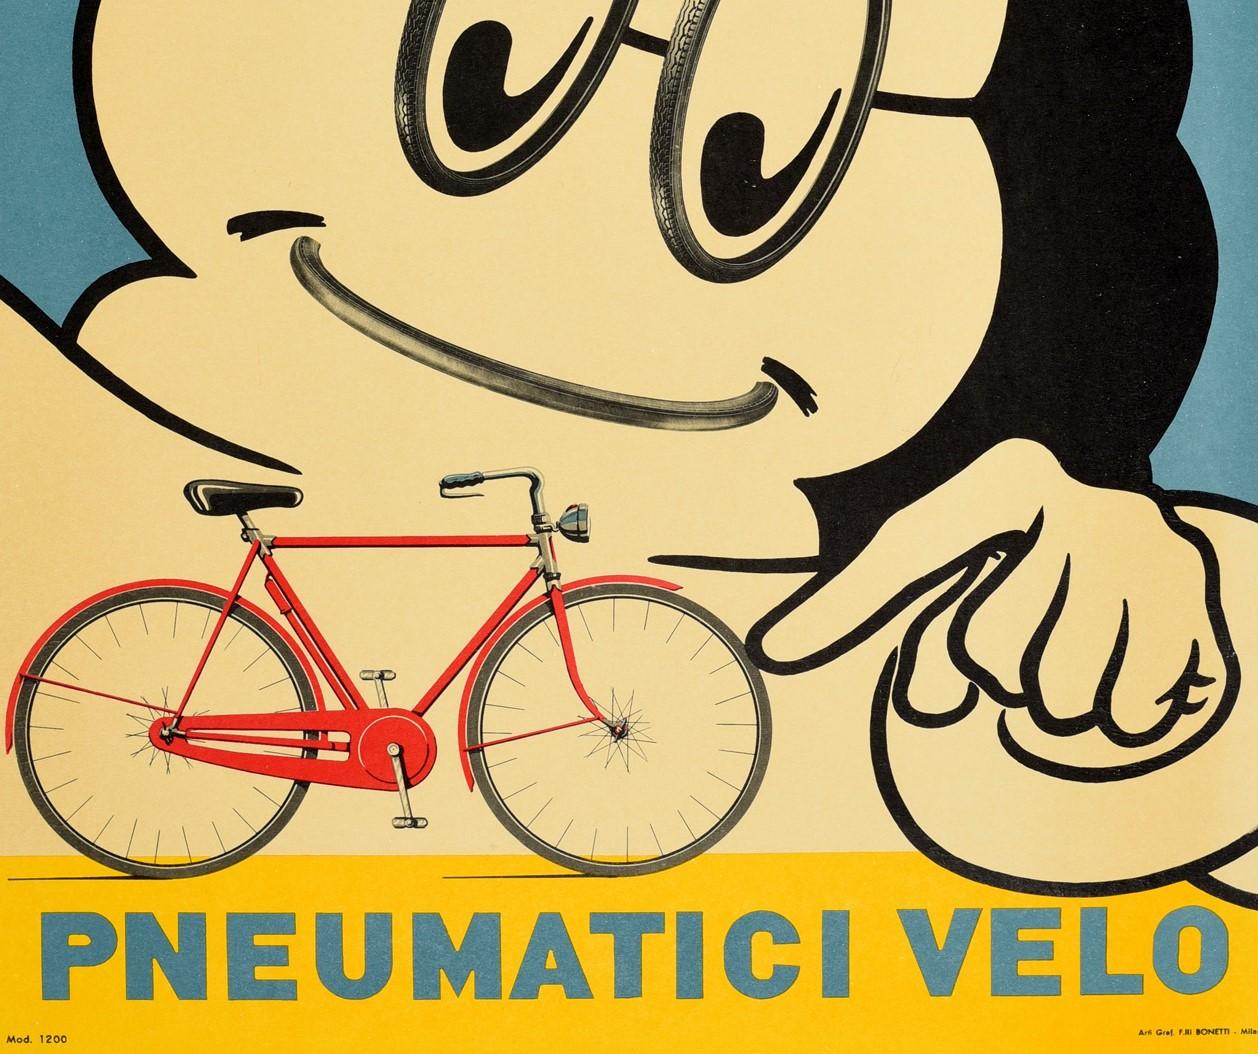 italien Original Vintage Poster Michelin Pneumatici Velo Bicycle Tyres Bibendum Design